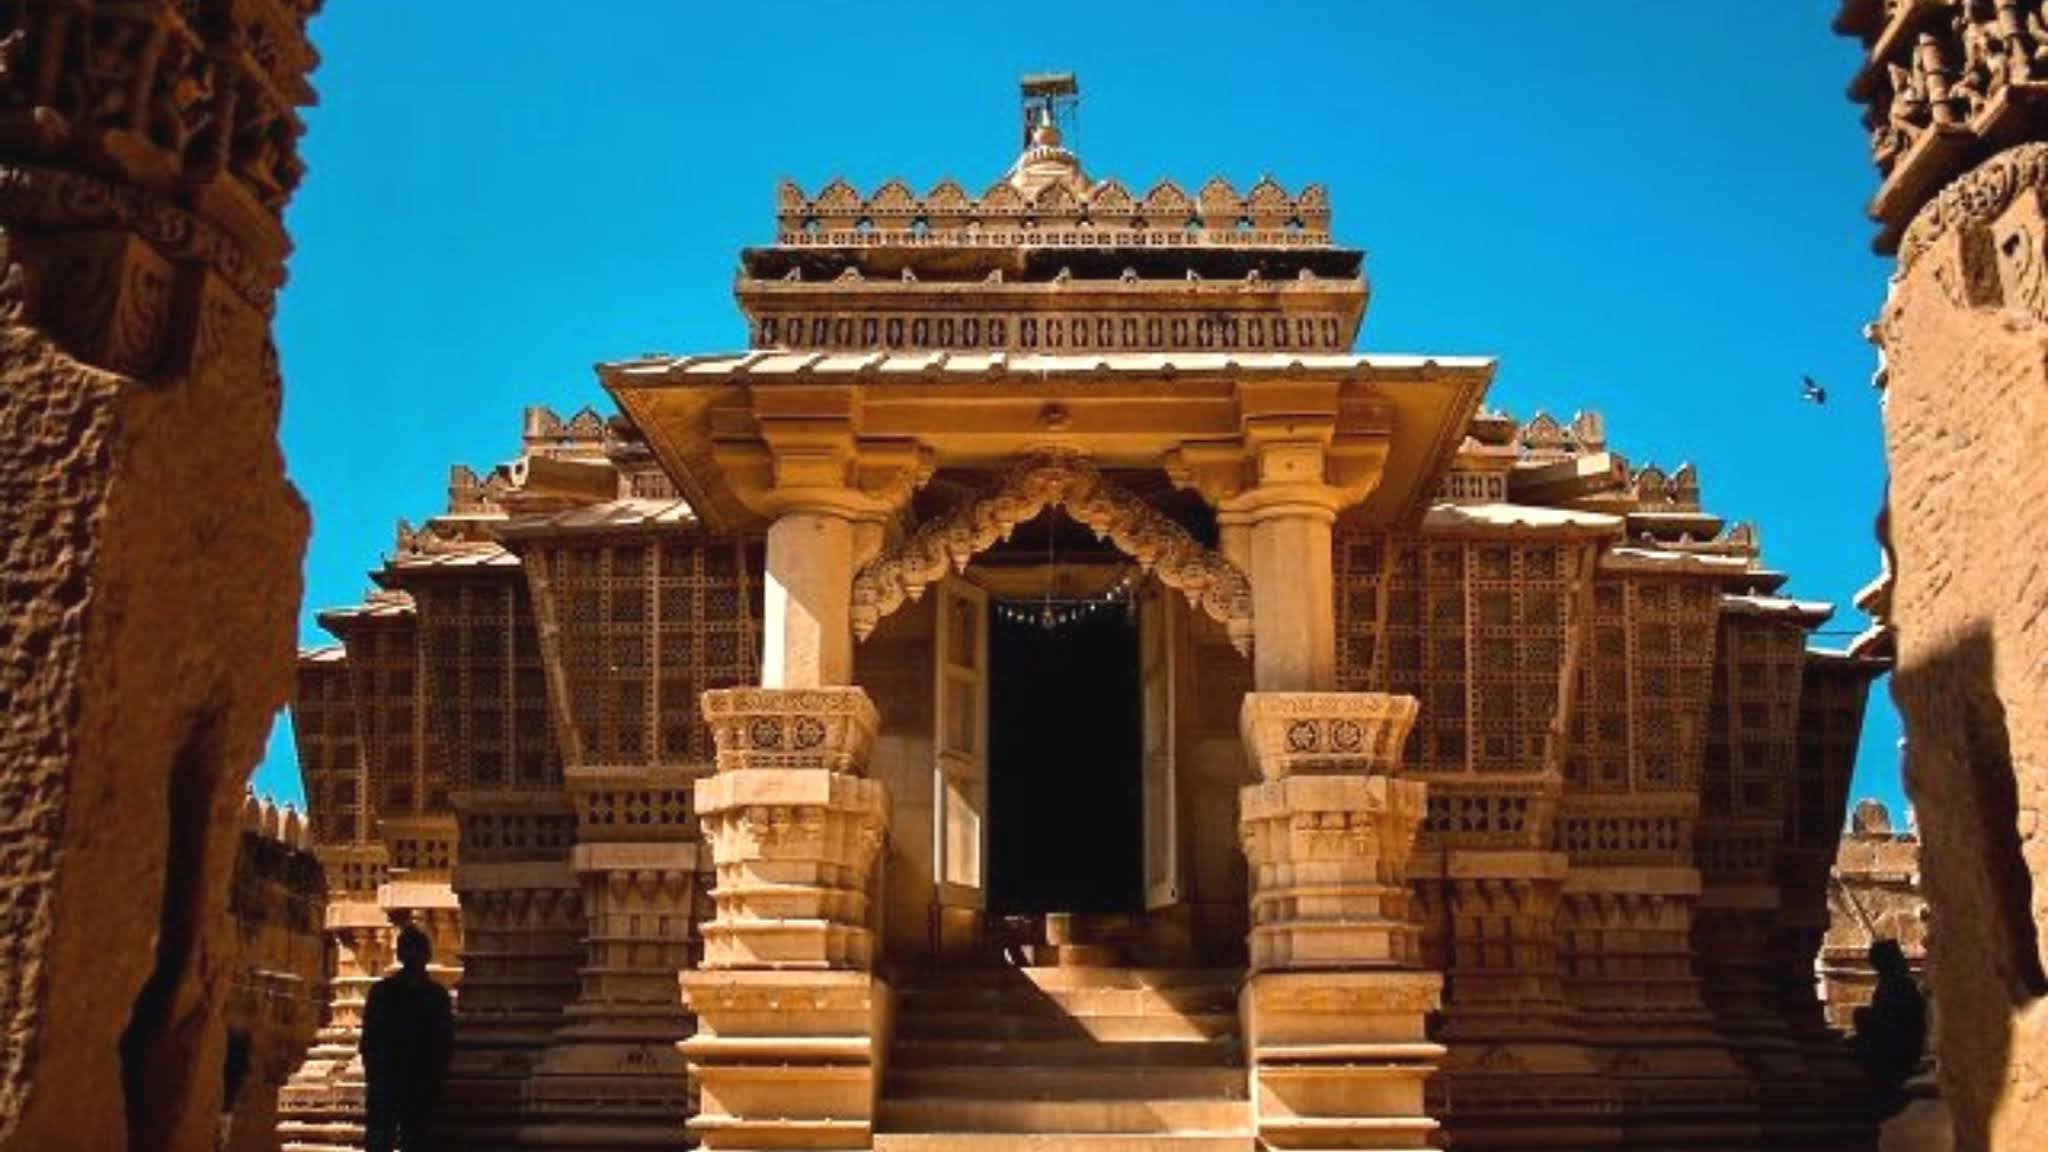 Lakshminath temple of Jaisalmer